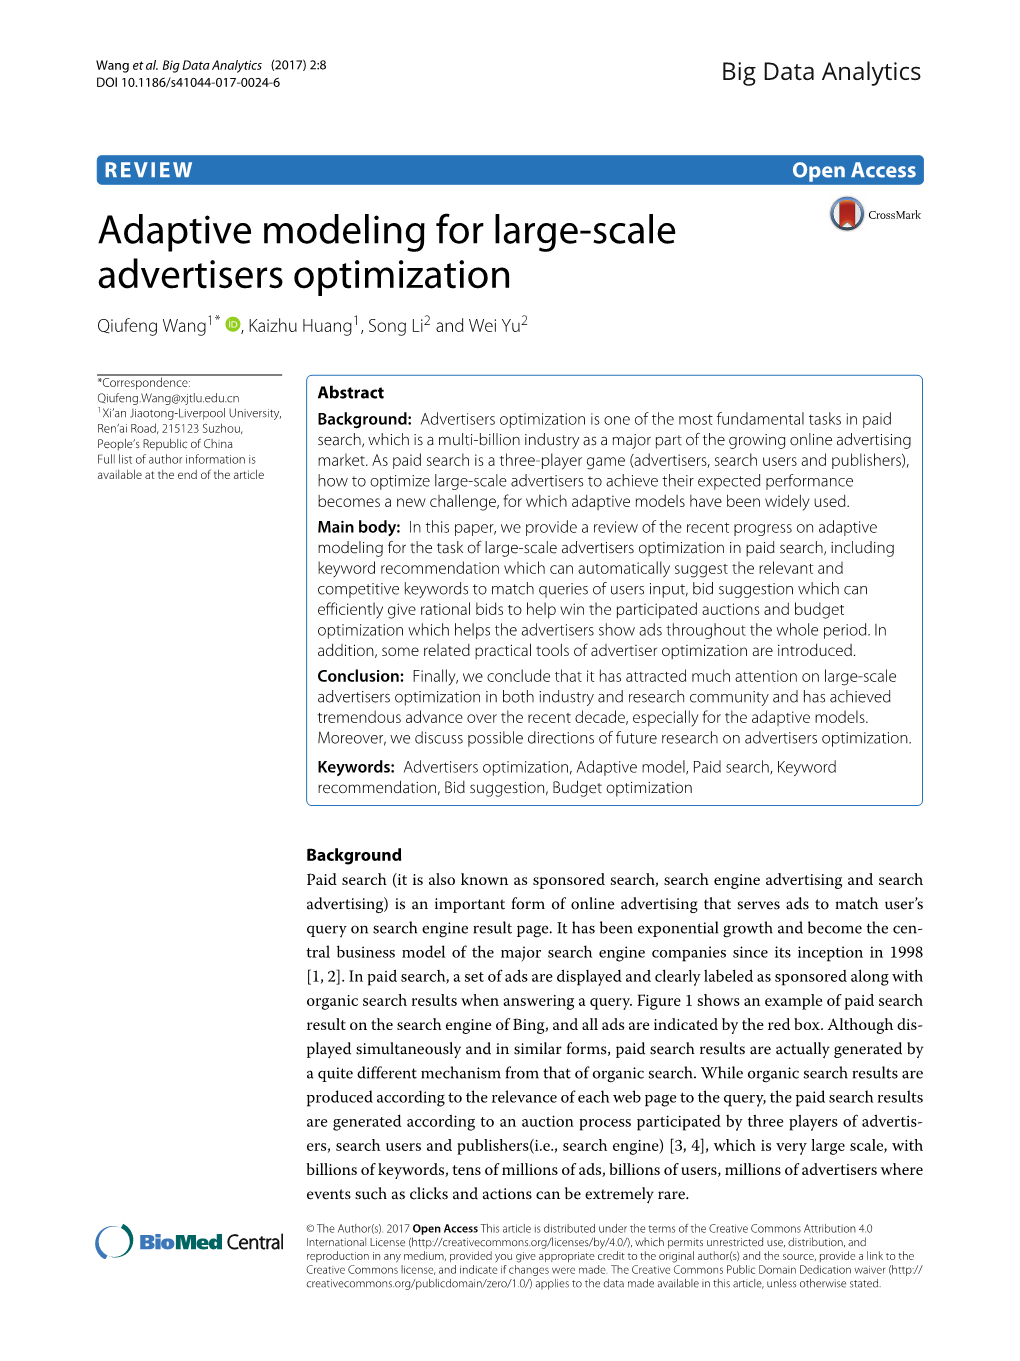 Adaptive Modeling for Large-Scale Advertisers Optimization